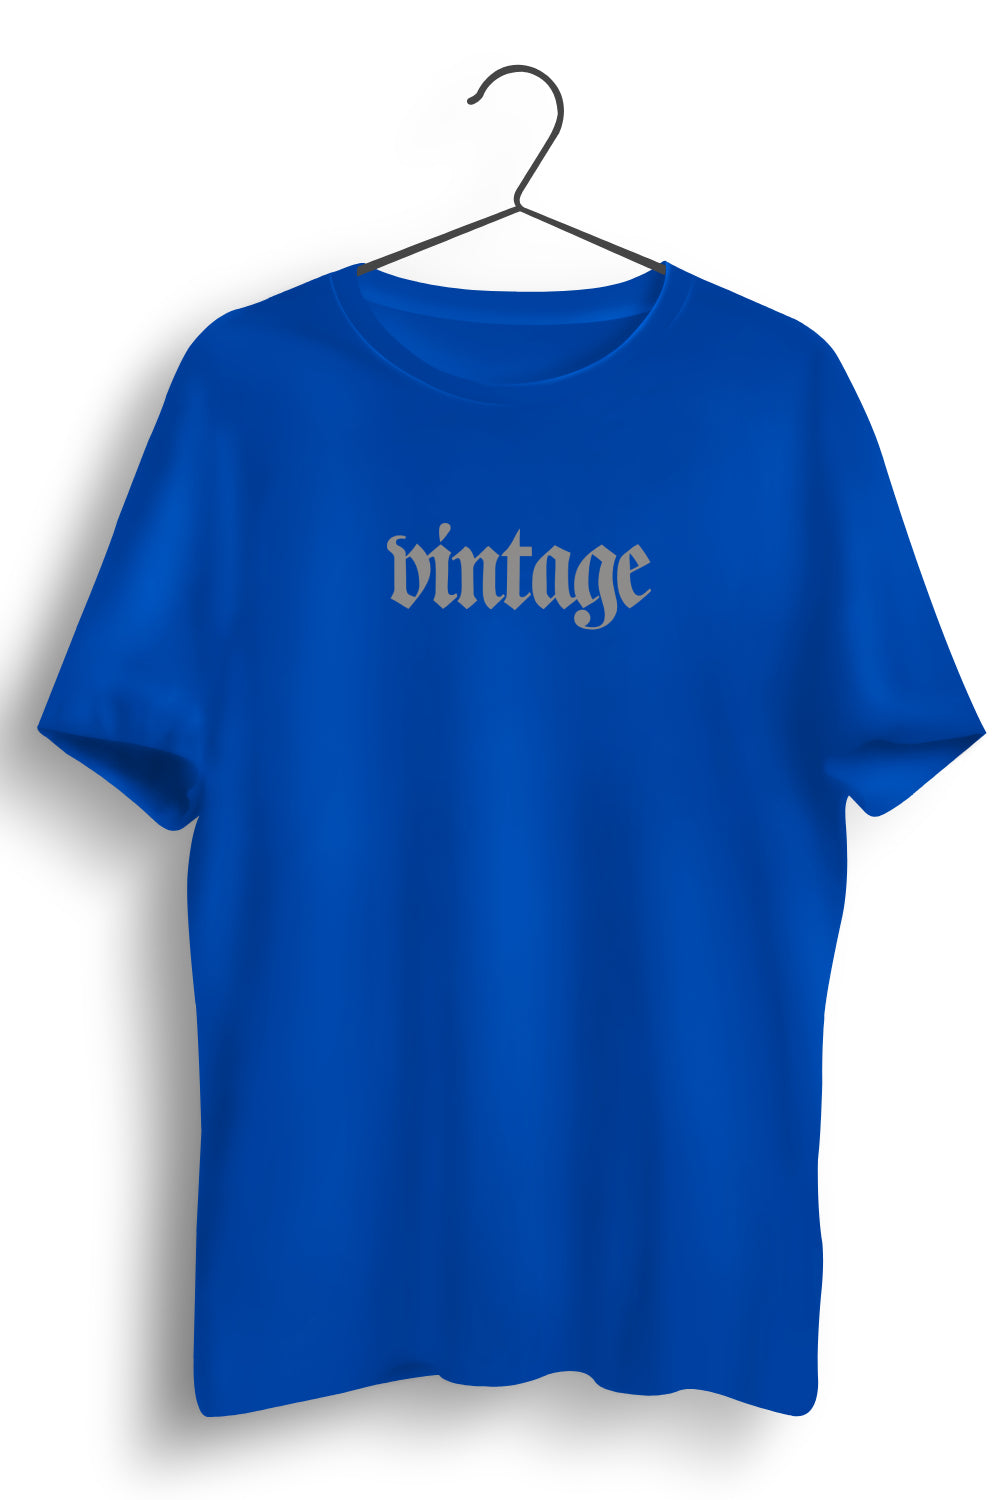 Vintage Reflective Print Blue Tshirt